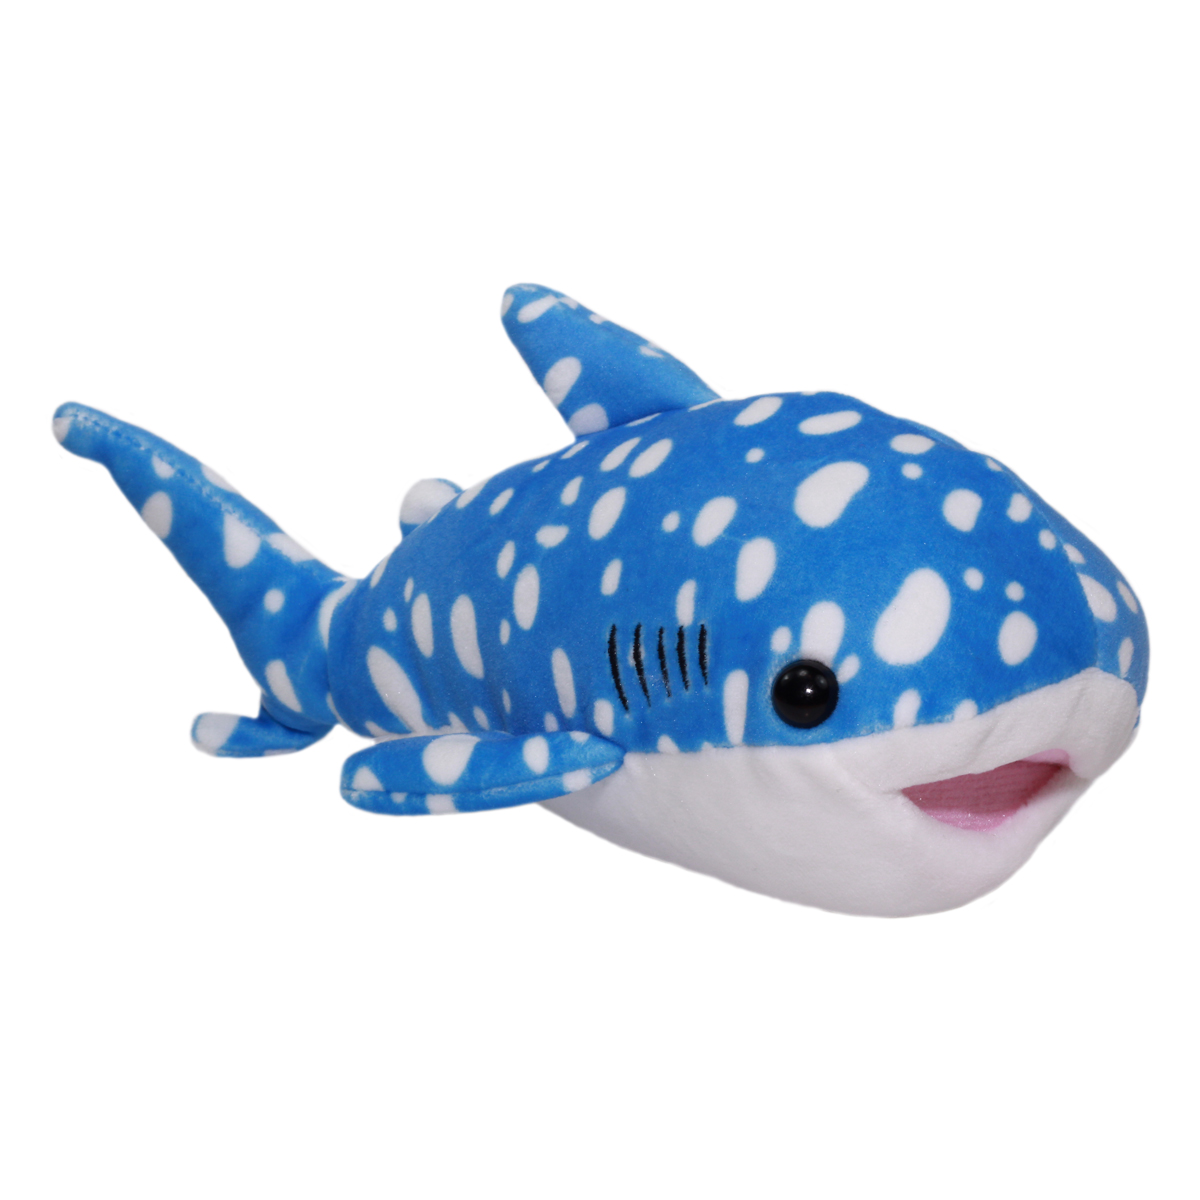 Aquarium Collection Plush Whale Shark Plush Toy Super Soft Stuffed Animal Blue White Dot Zinbeizame 8 Inches